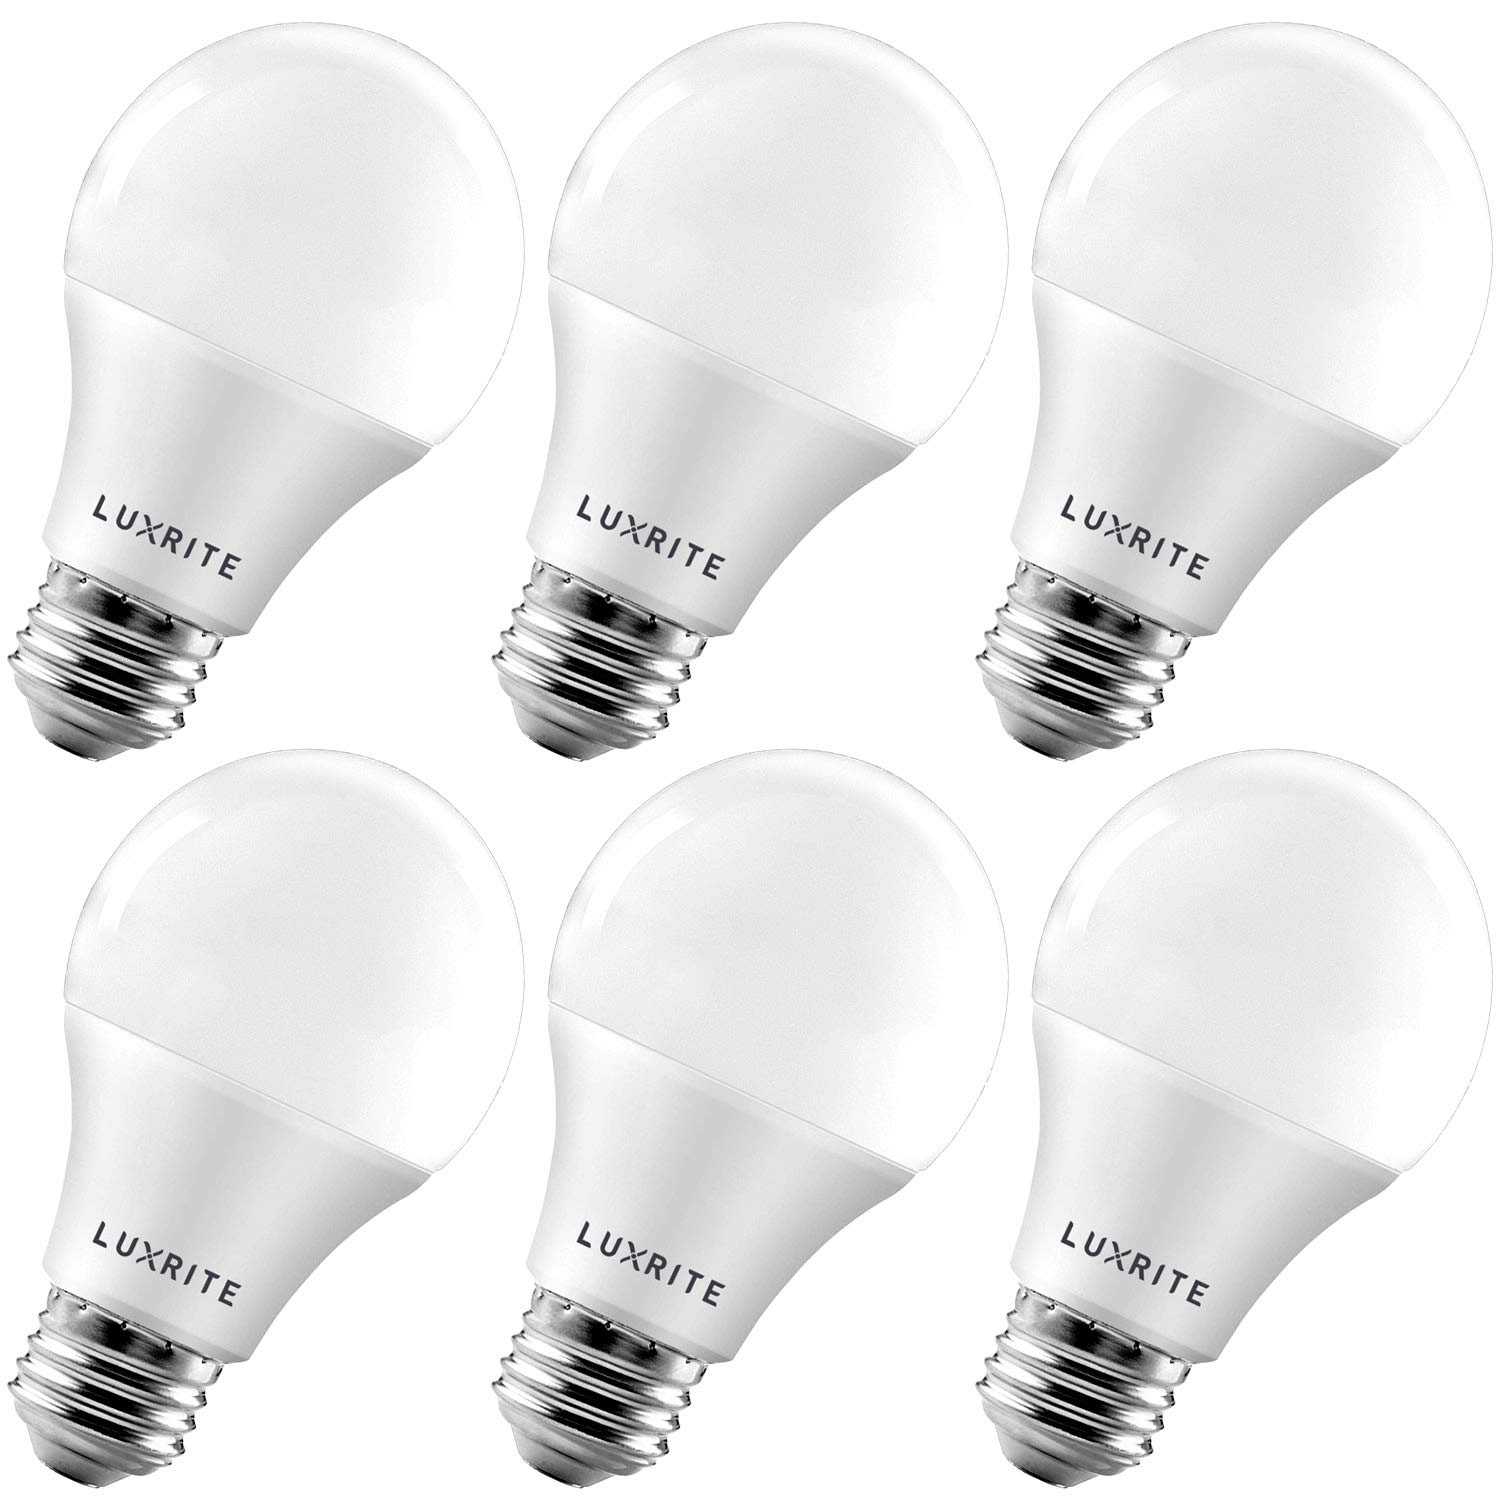 LUXRITE A19 LED Bulb